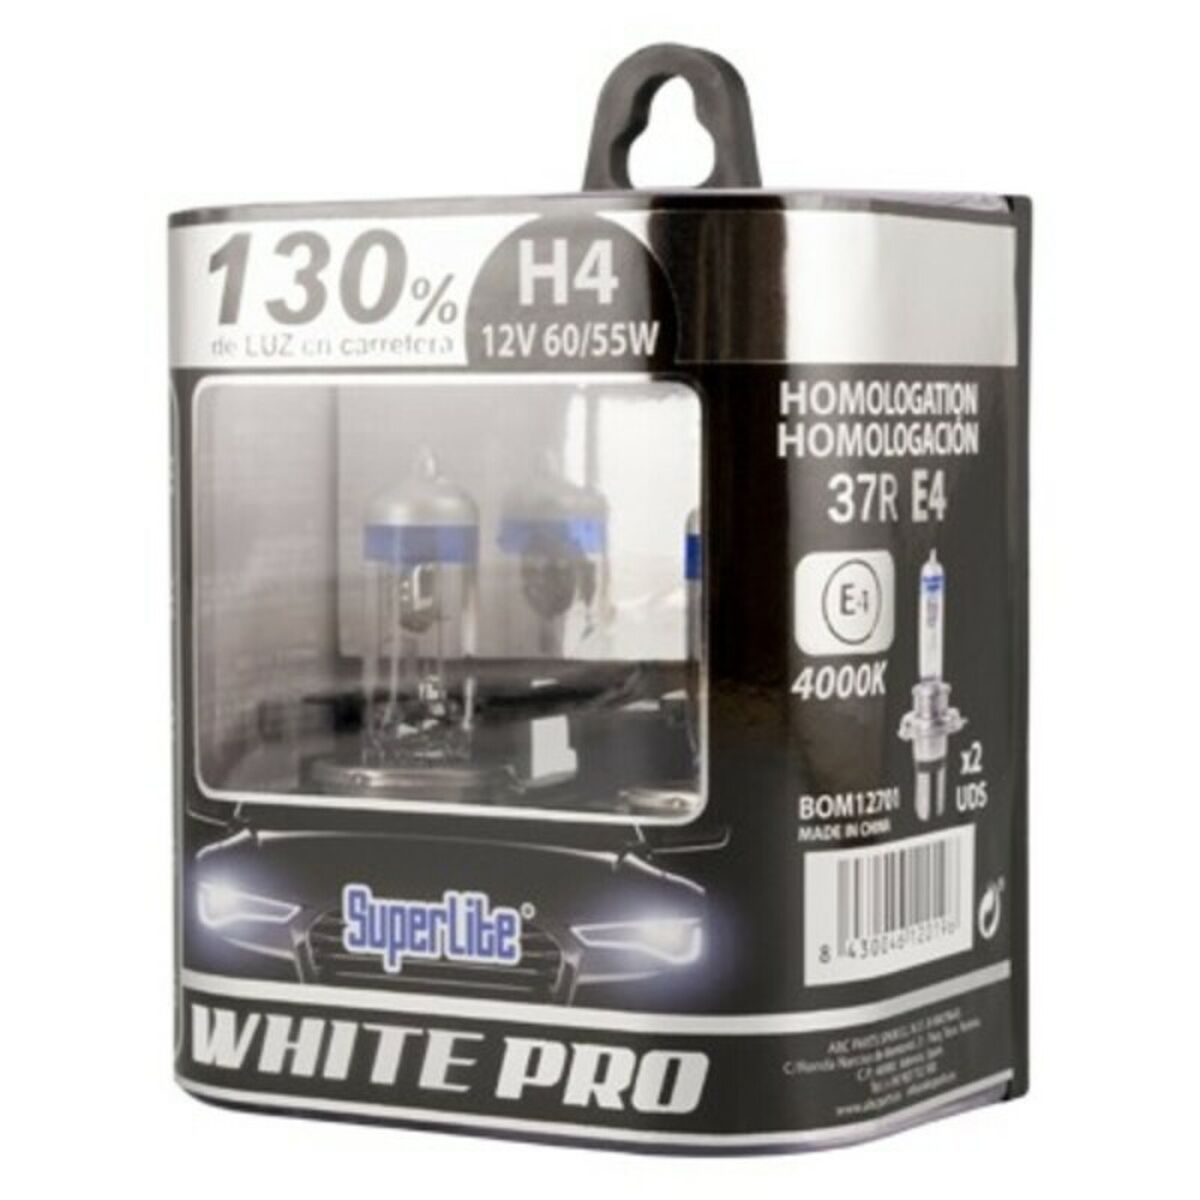 Lampadina per Auto Superlite White Pro H4 12V 55/60W 4000K 37R/E4